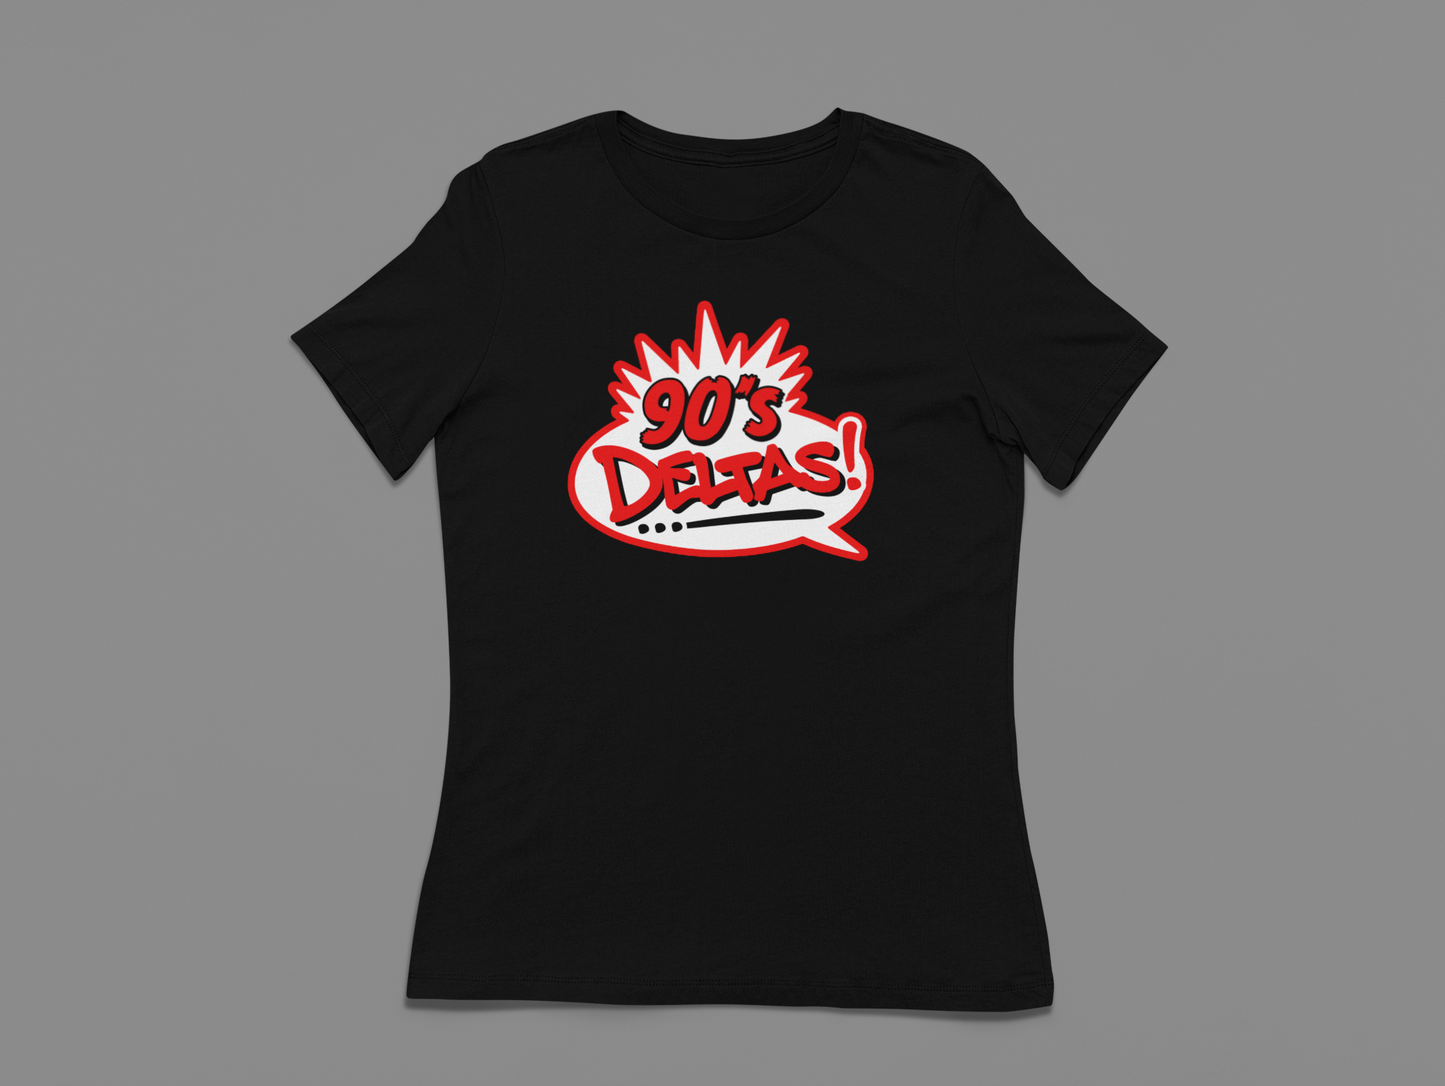 90's Deltas T-shirt